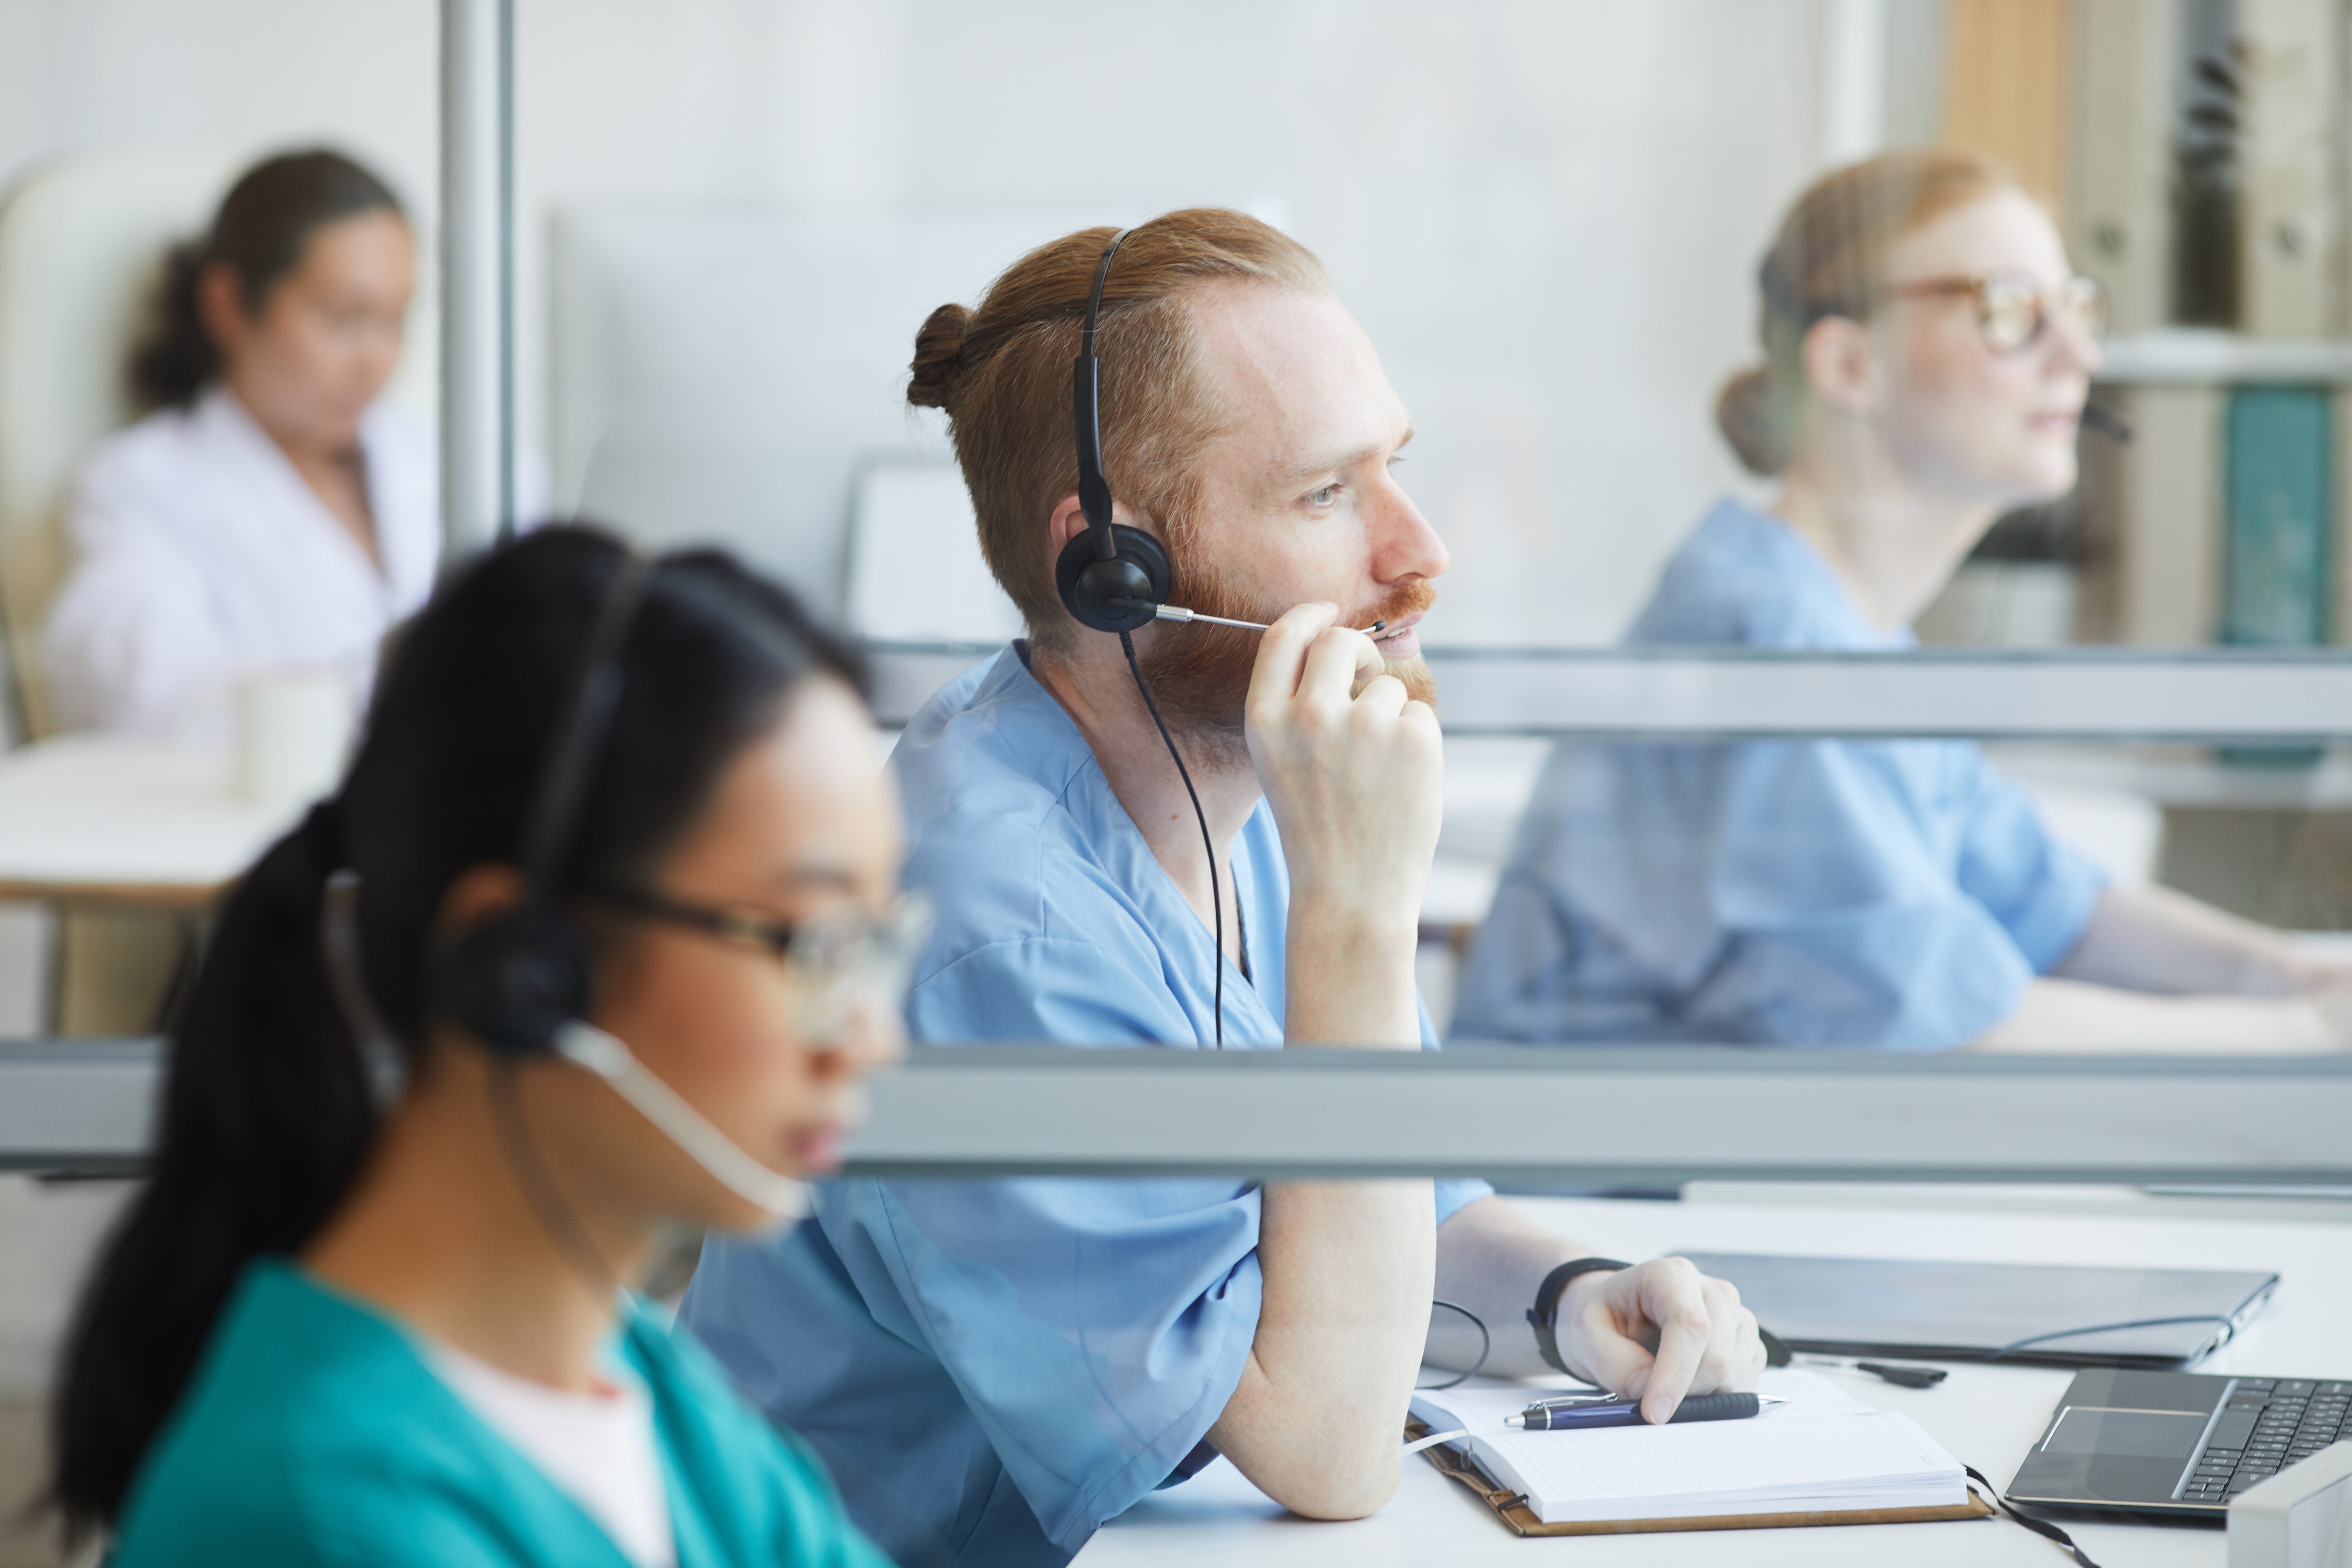 operators-working-in-medical-call-center-2021-08-28-19-18-58-utc